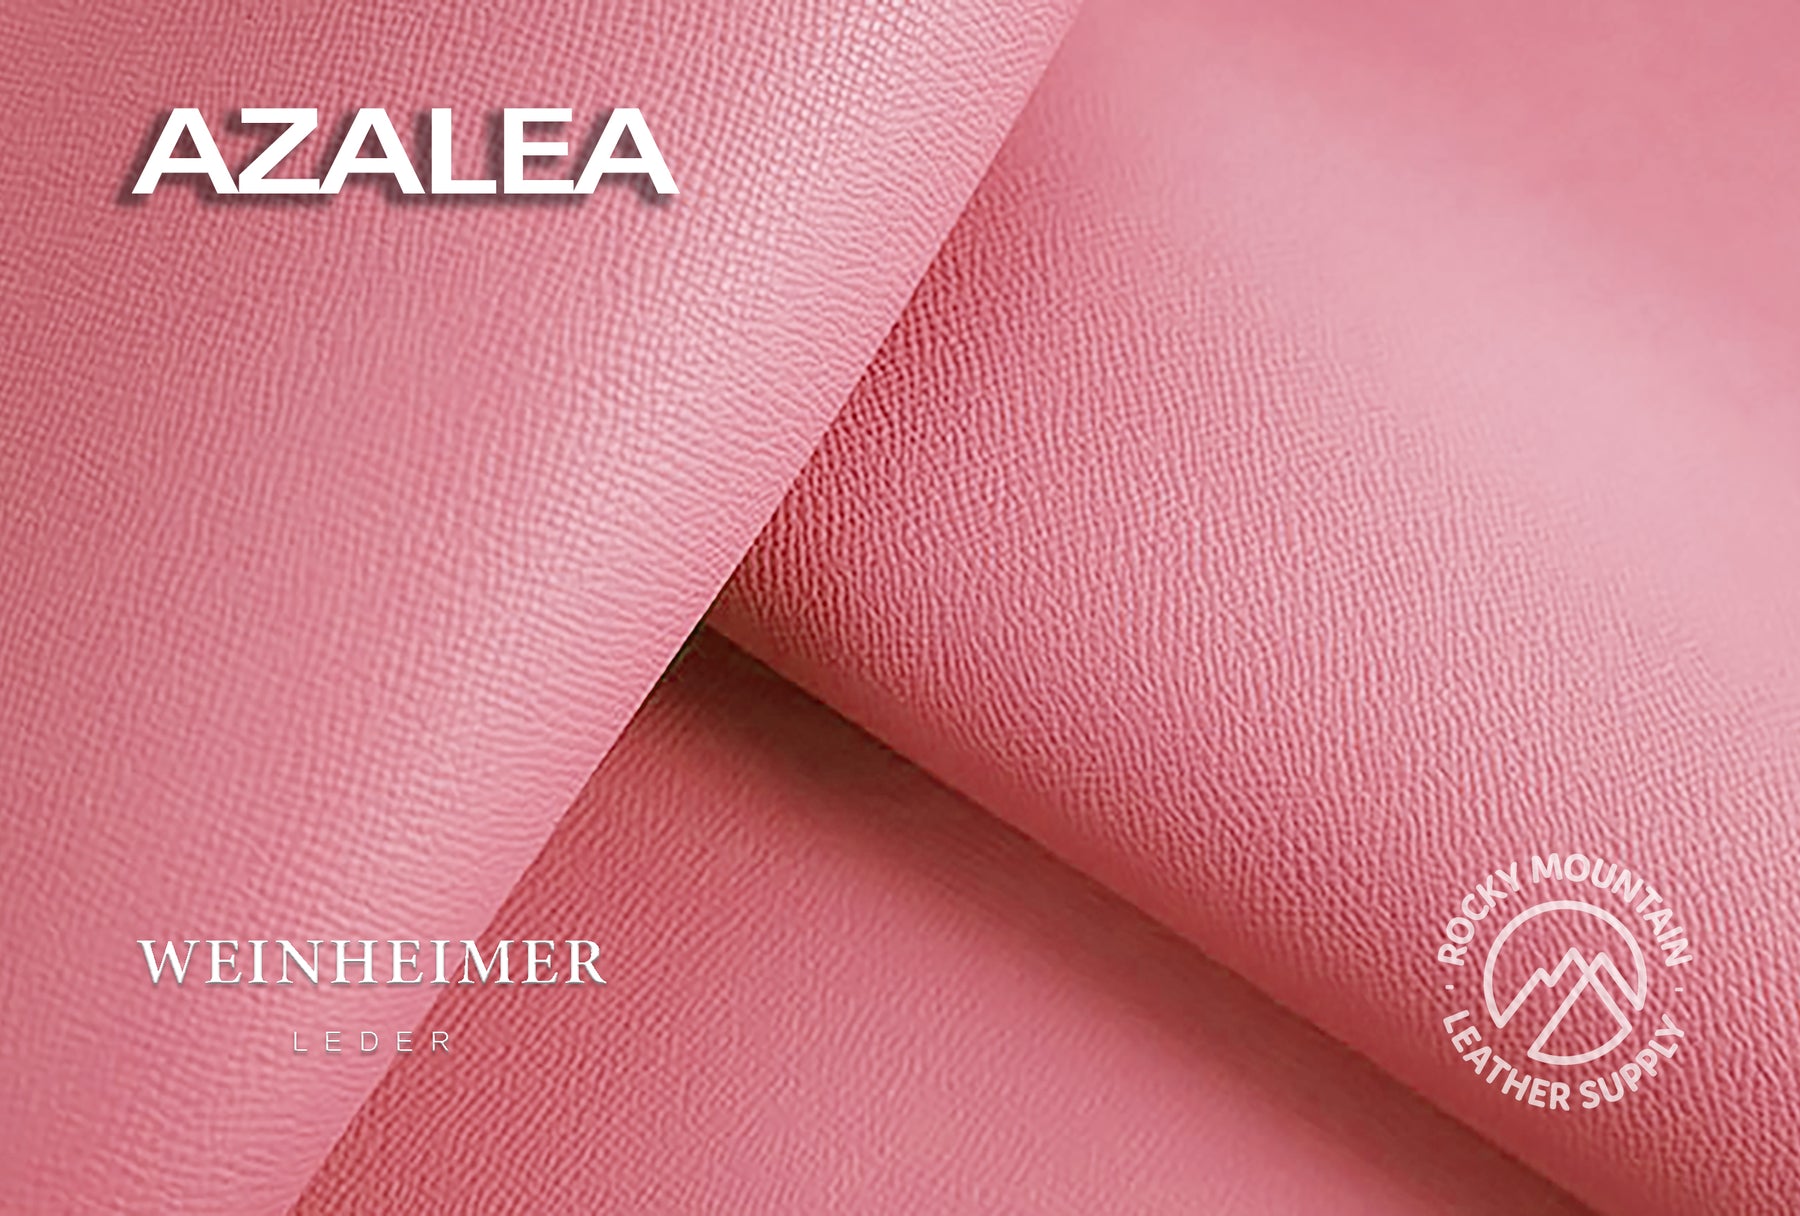 Weinheimer Leder 🇩🇪 - Waprolux® - Luxury Calfskin Leather (HIDES)